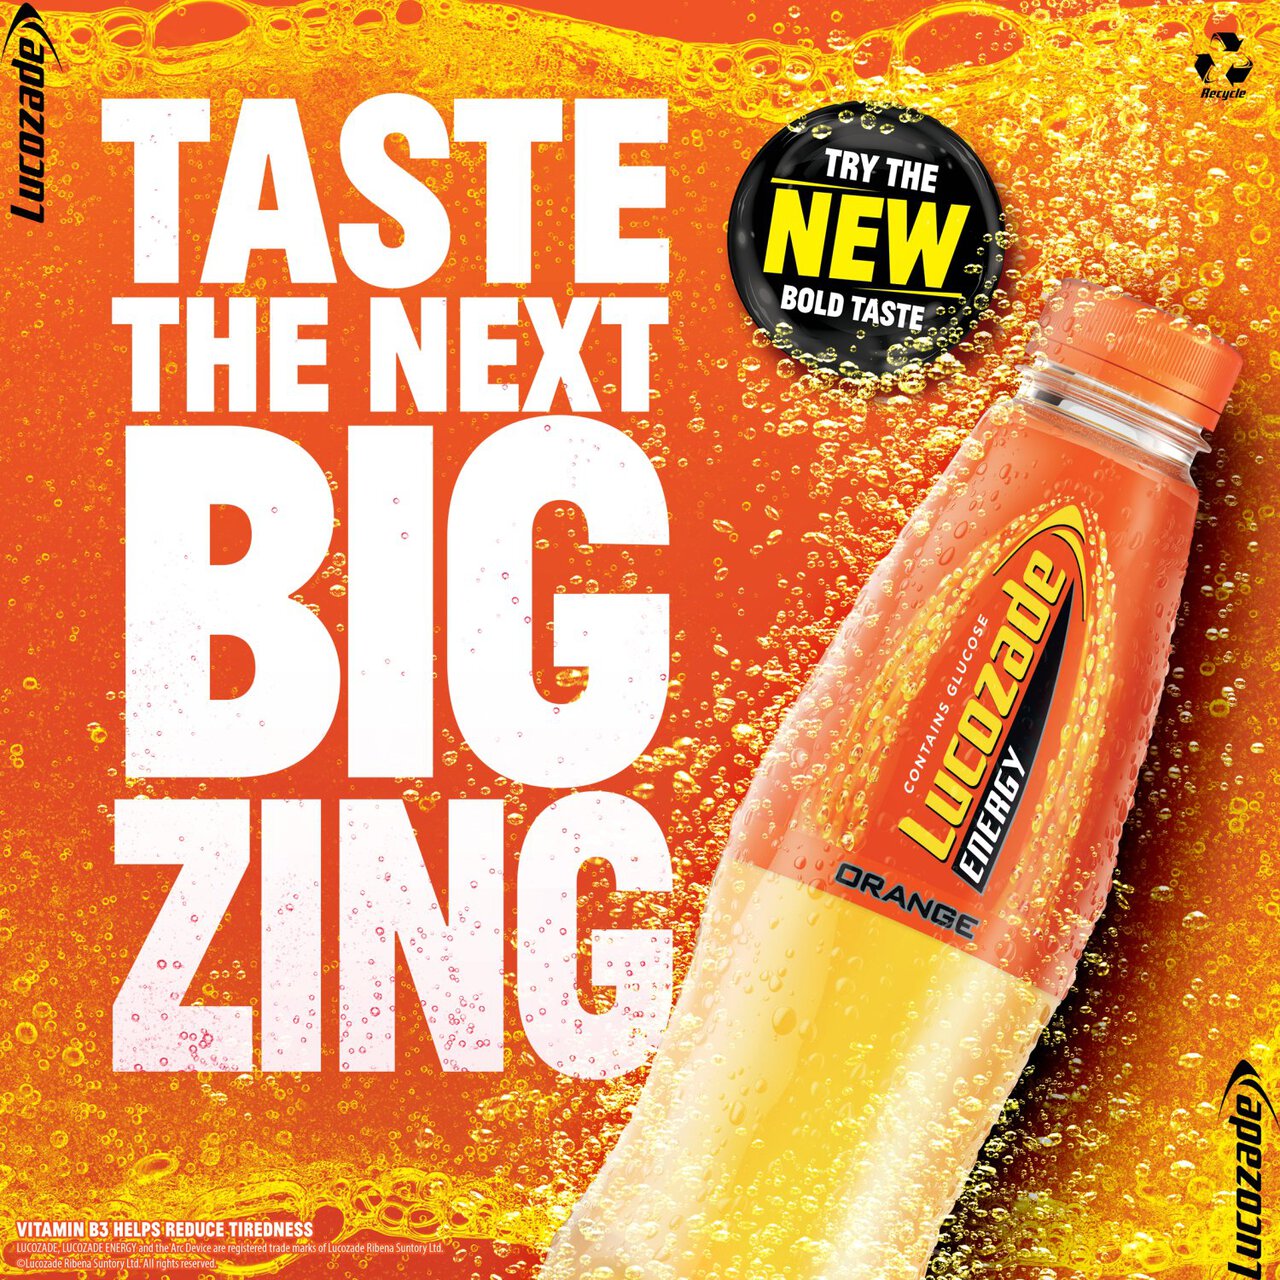 Lucozade Energy Drink Orange 4 x 380ml